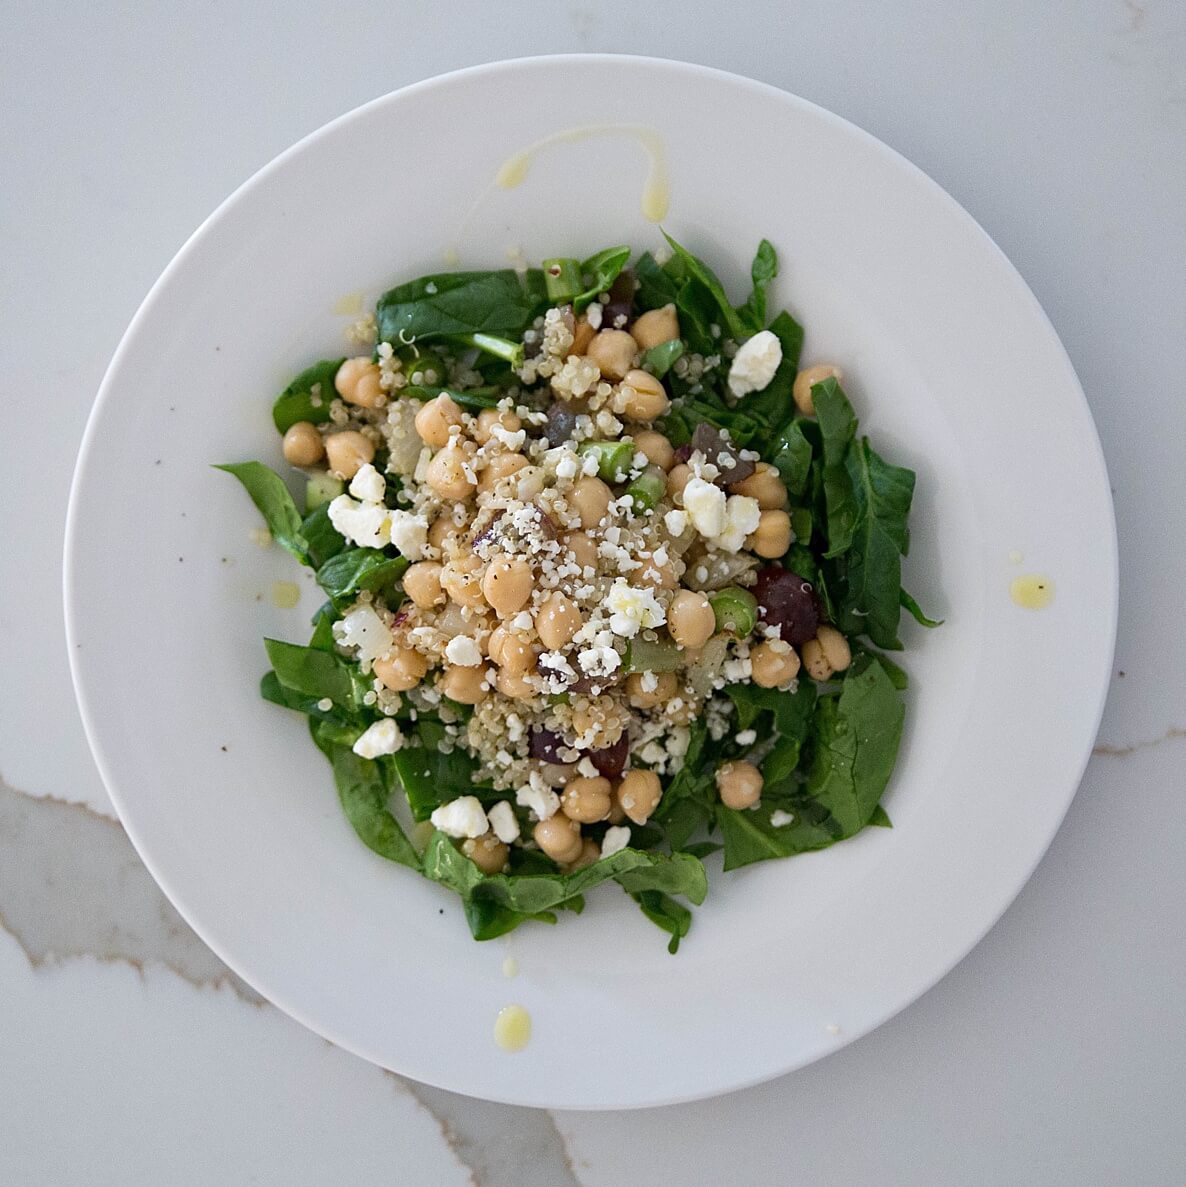 BTD MEAL PLAN WEEK 4BTD MEAL PLAN WEEK 4 - Spinach Quinoa & Chickpea Salad - Sweet & Savory Chicken Panini 